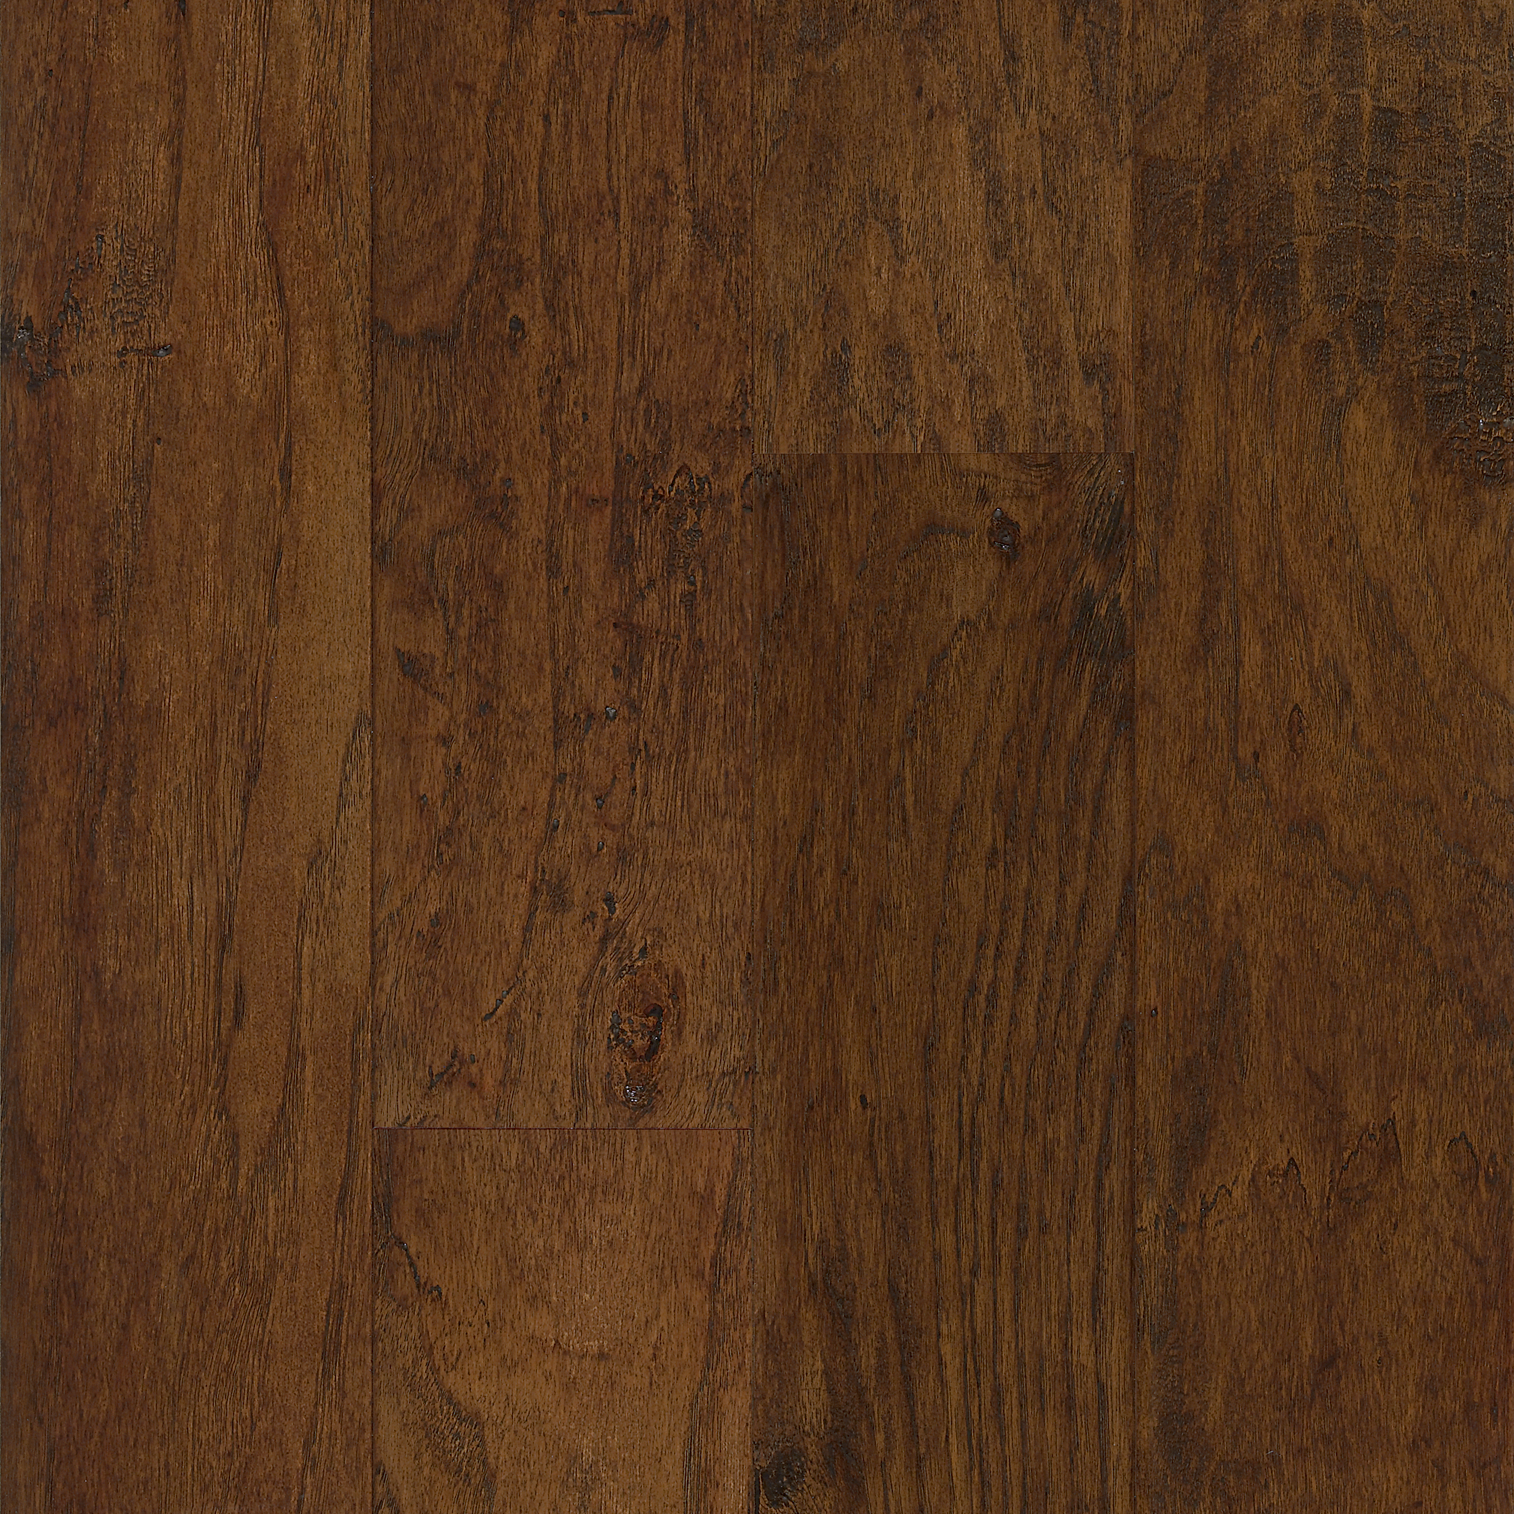 Hickory Engineered Hardwood Eas509ee, Lon’s Own Hardwood Flooring